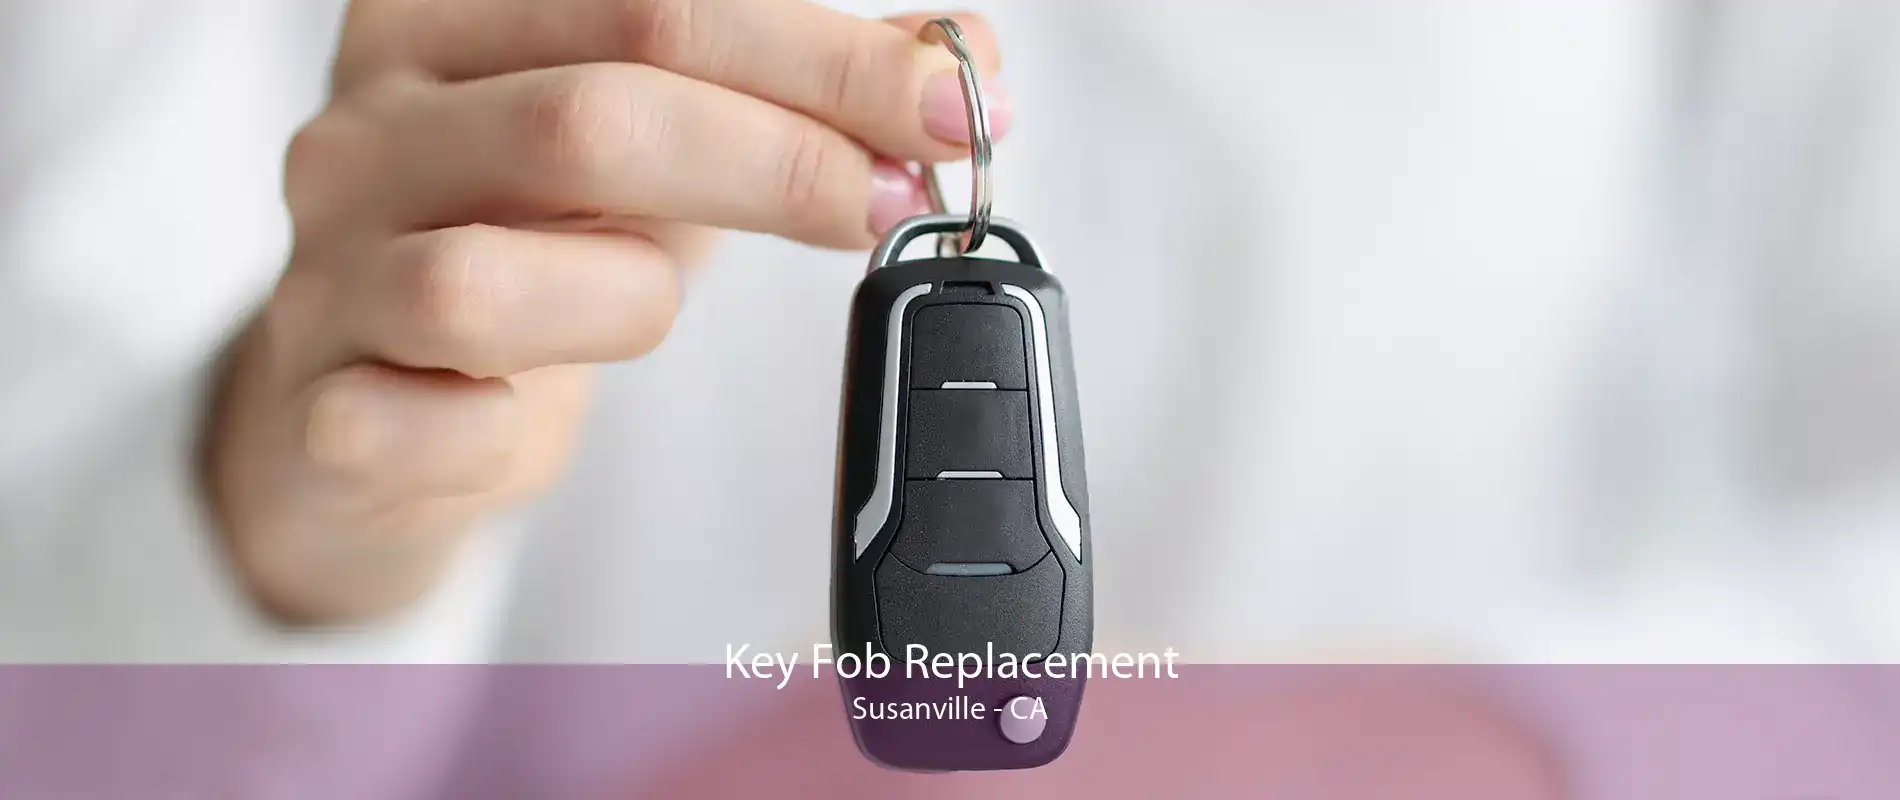 Key Fob Replacement Susanville - CA